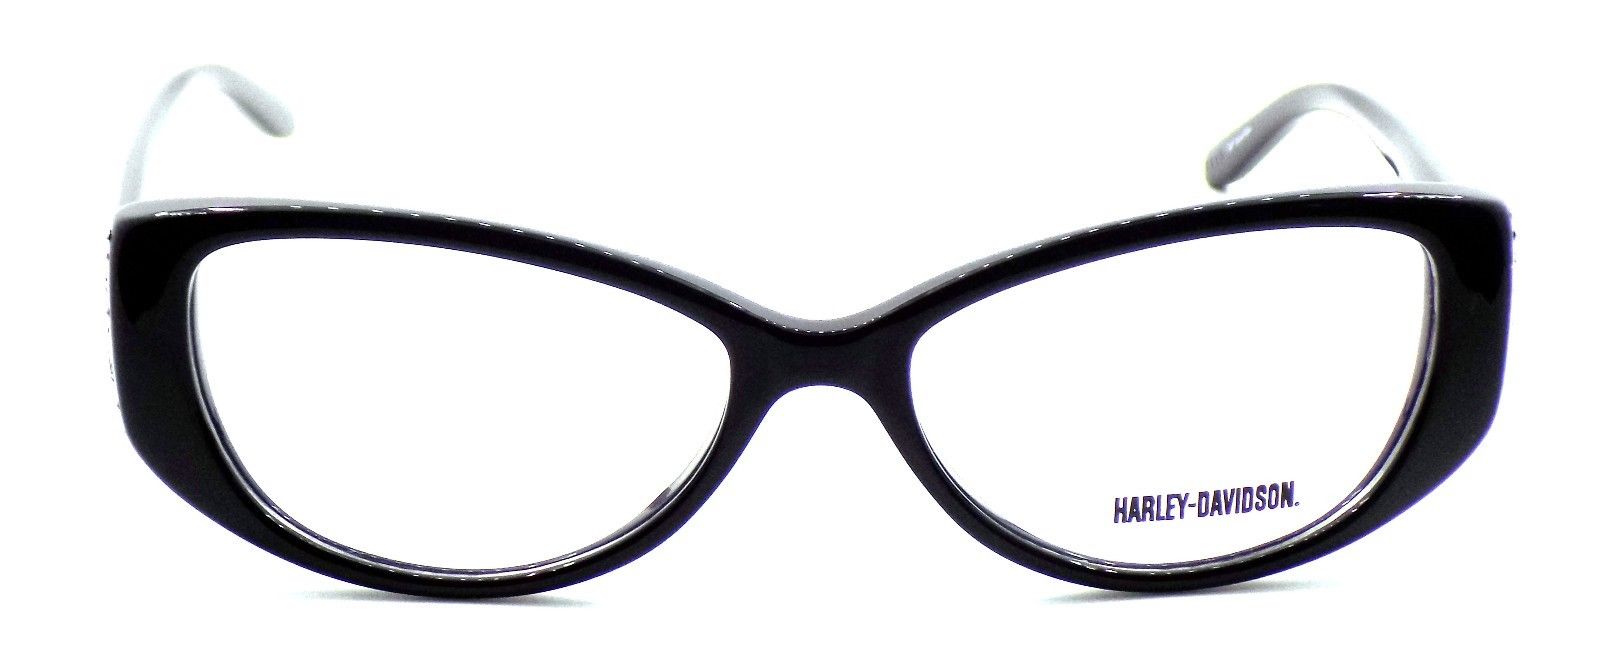 2-Harley Davidson HD514 BLK Women's Eyeglasses Frames 51-15-135 Shiny Black + CASE-715583766433-IKSpecs